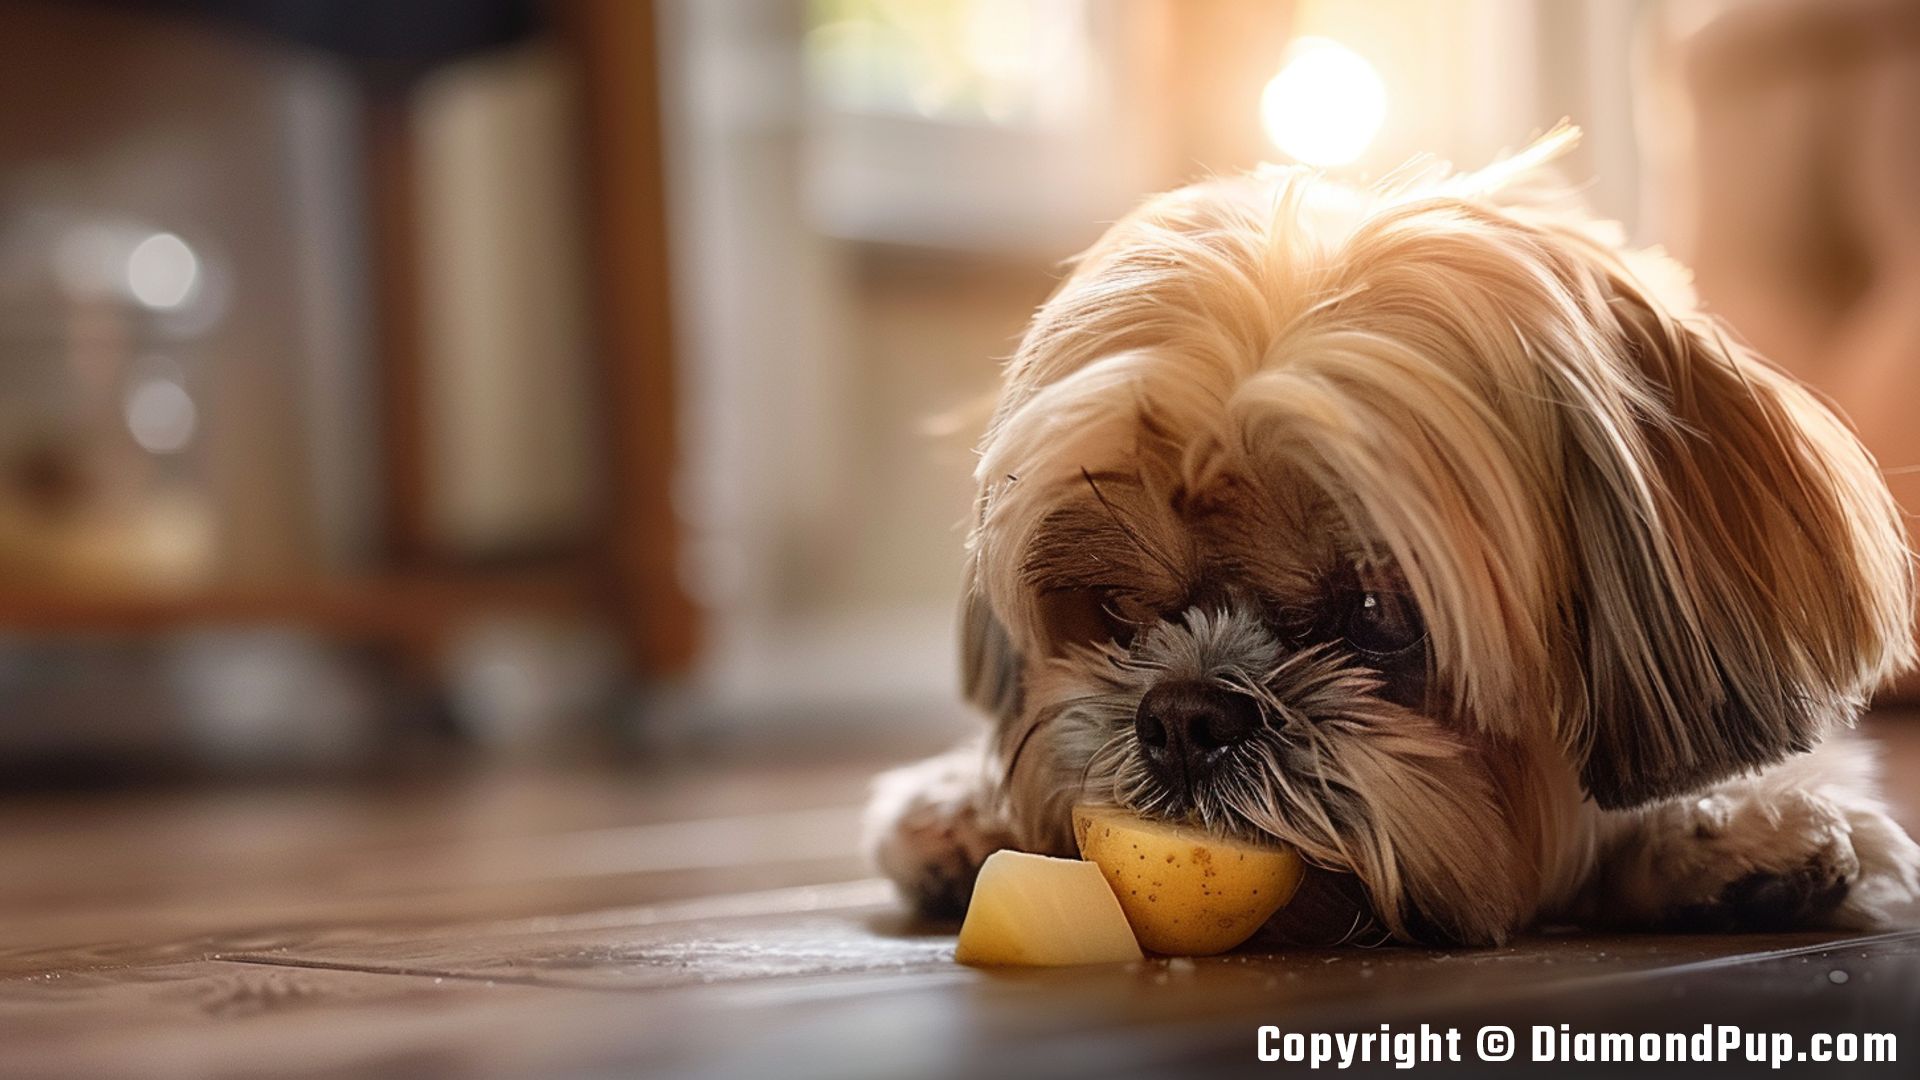 Photograph of a Playful Shih Tzu Eating Potato